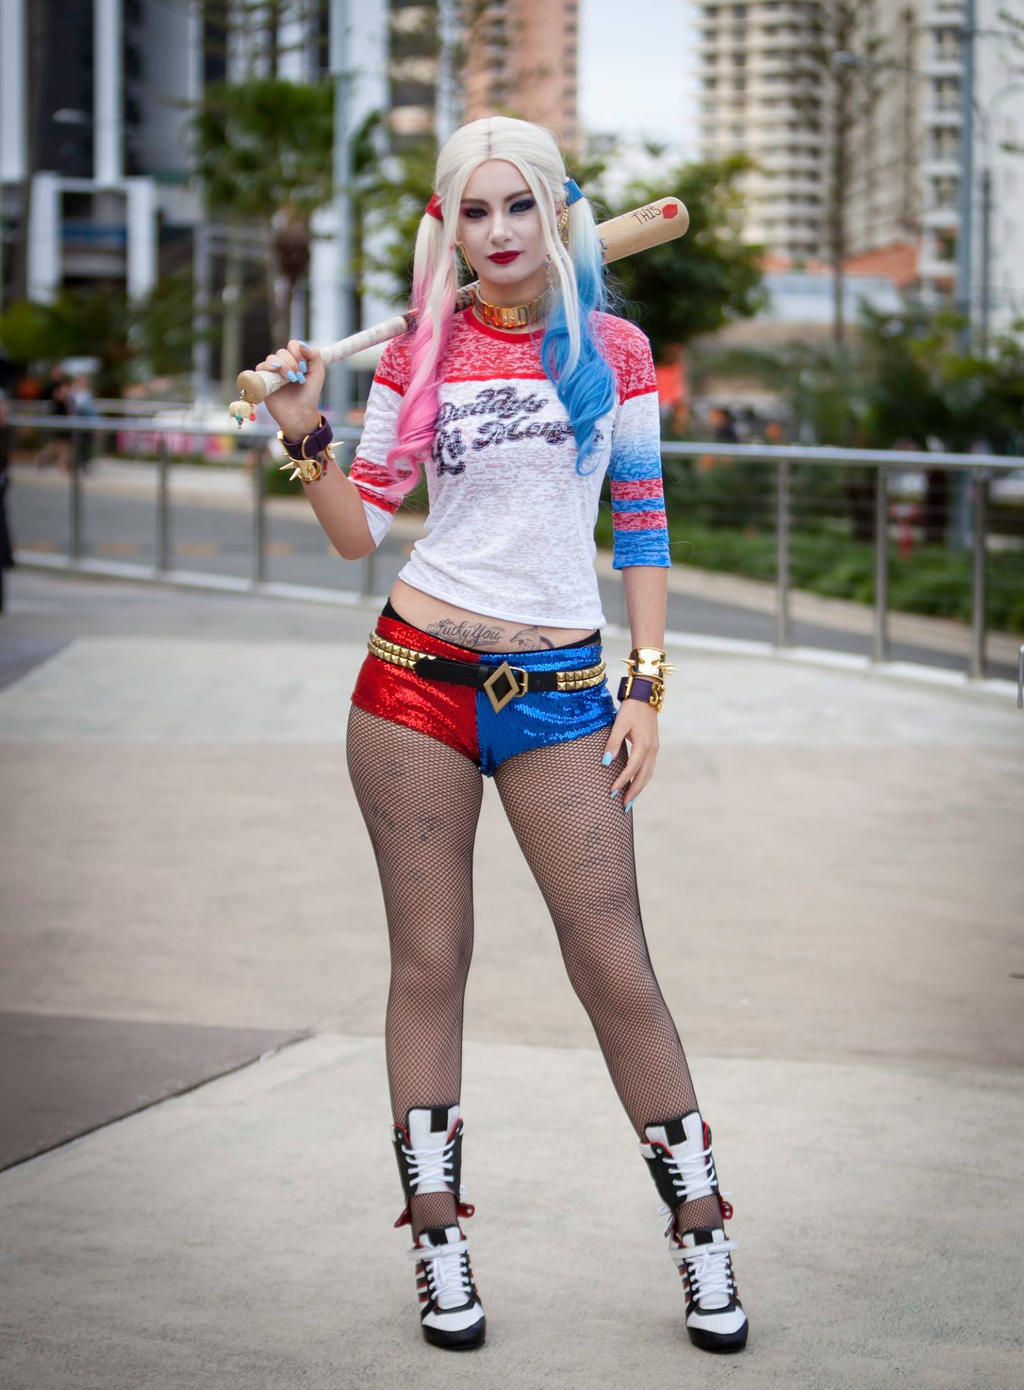 Harley Quinn by AllyAuer on DeviantArt